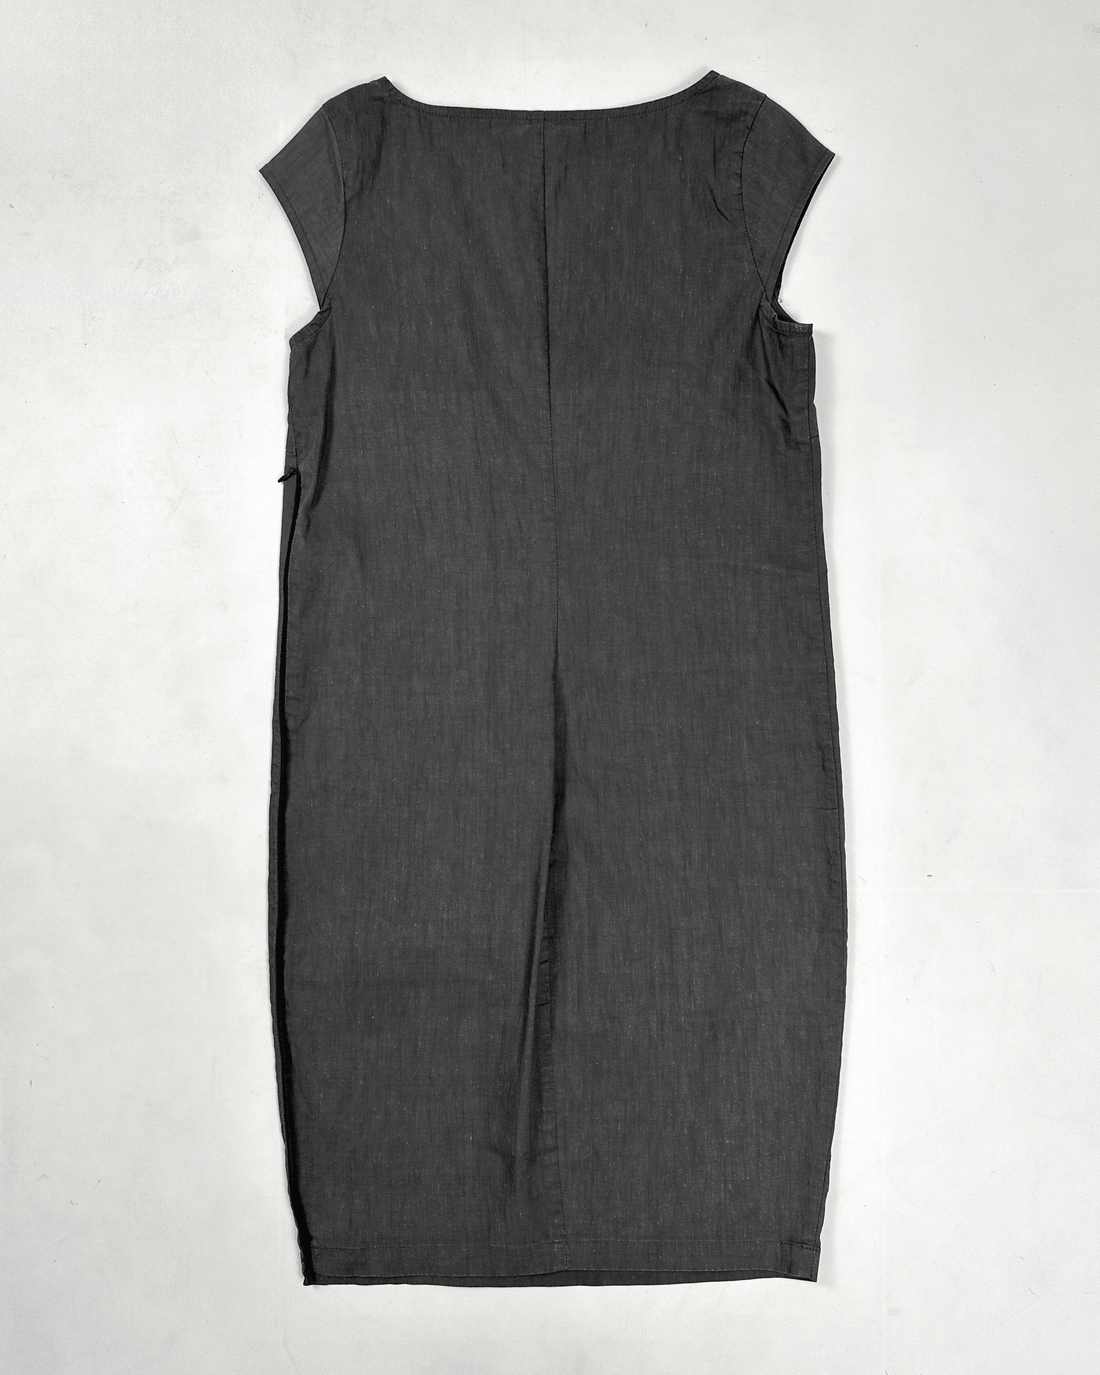 Sarah Pacini Dark Grey Zipped Dress 2000's